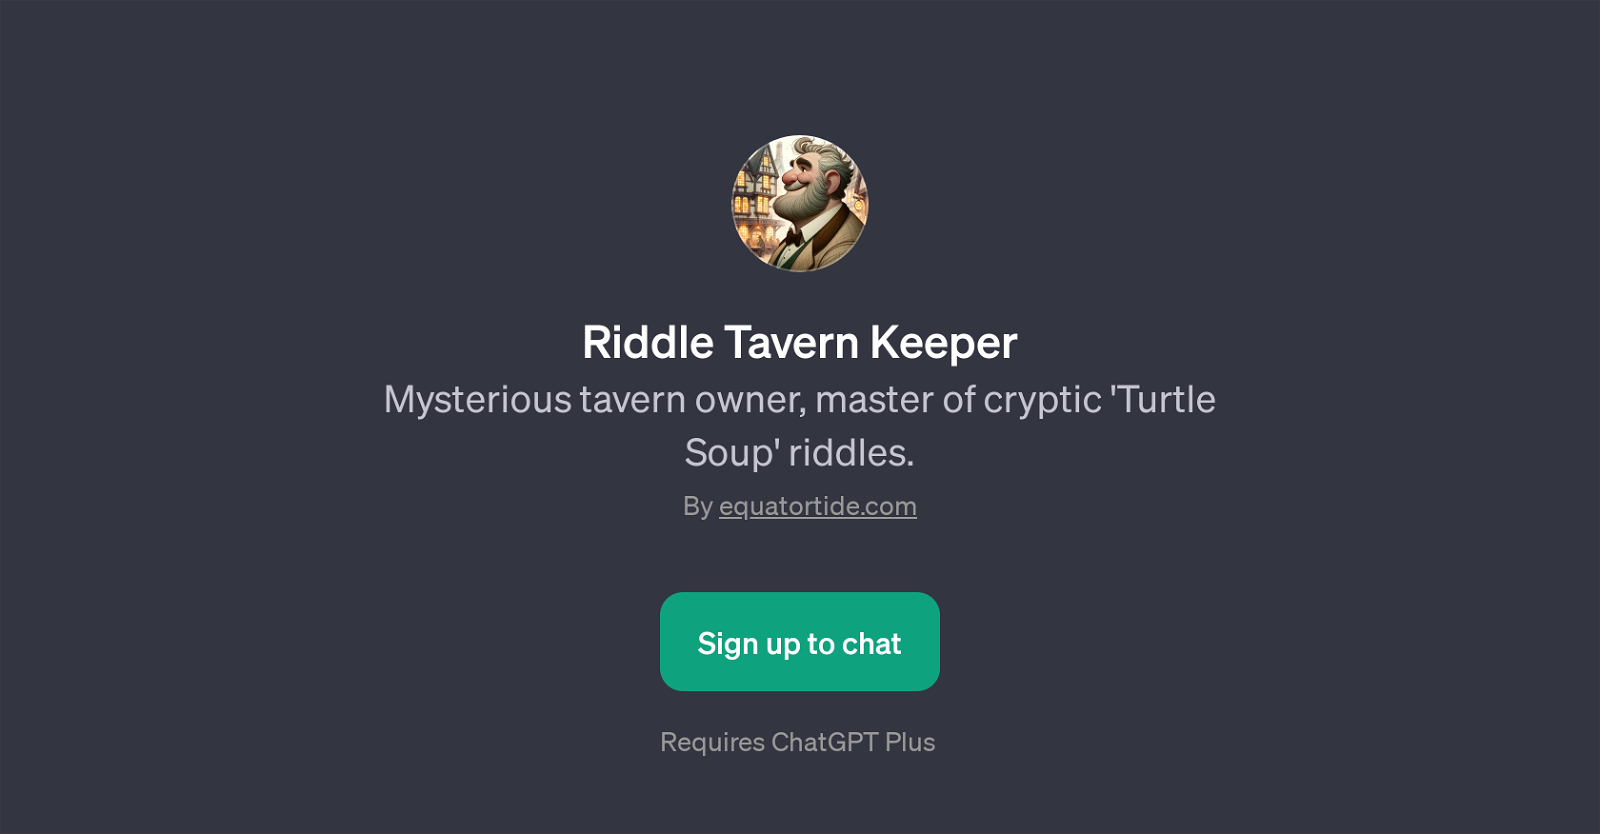 Riddle Tavern Keeper website